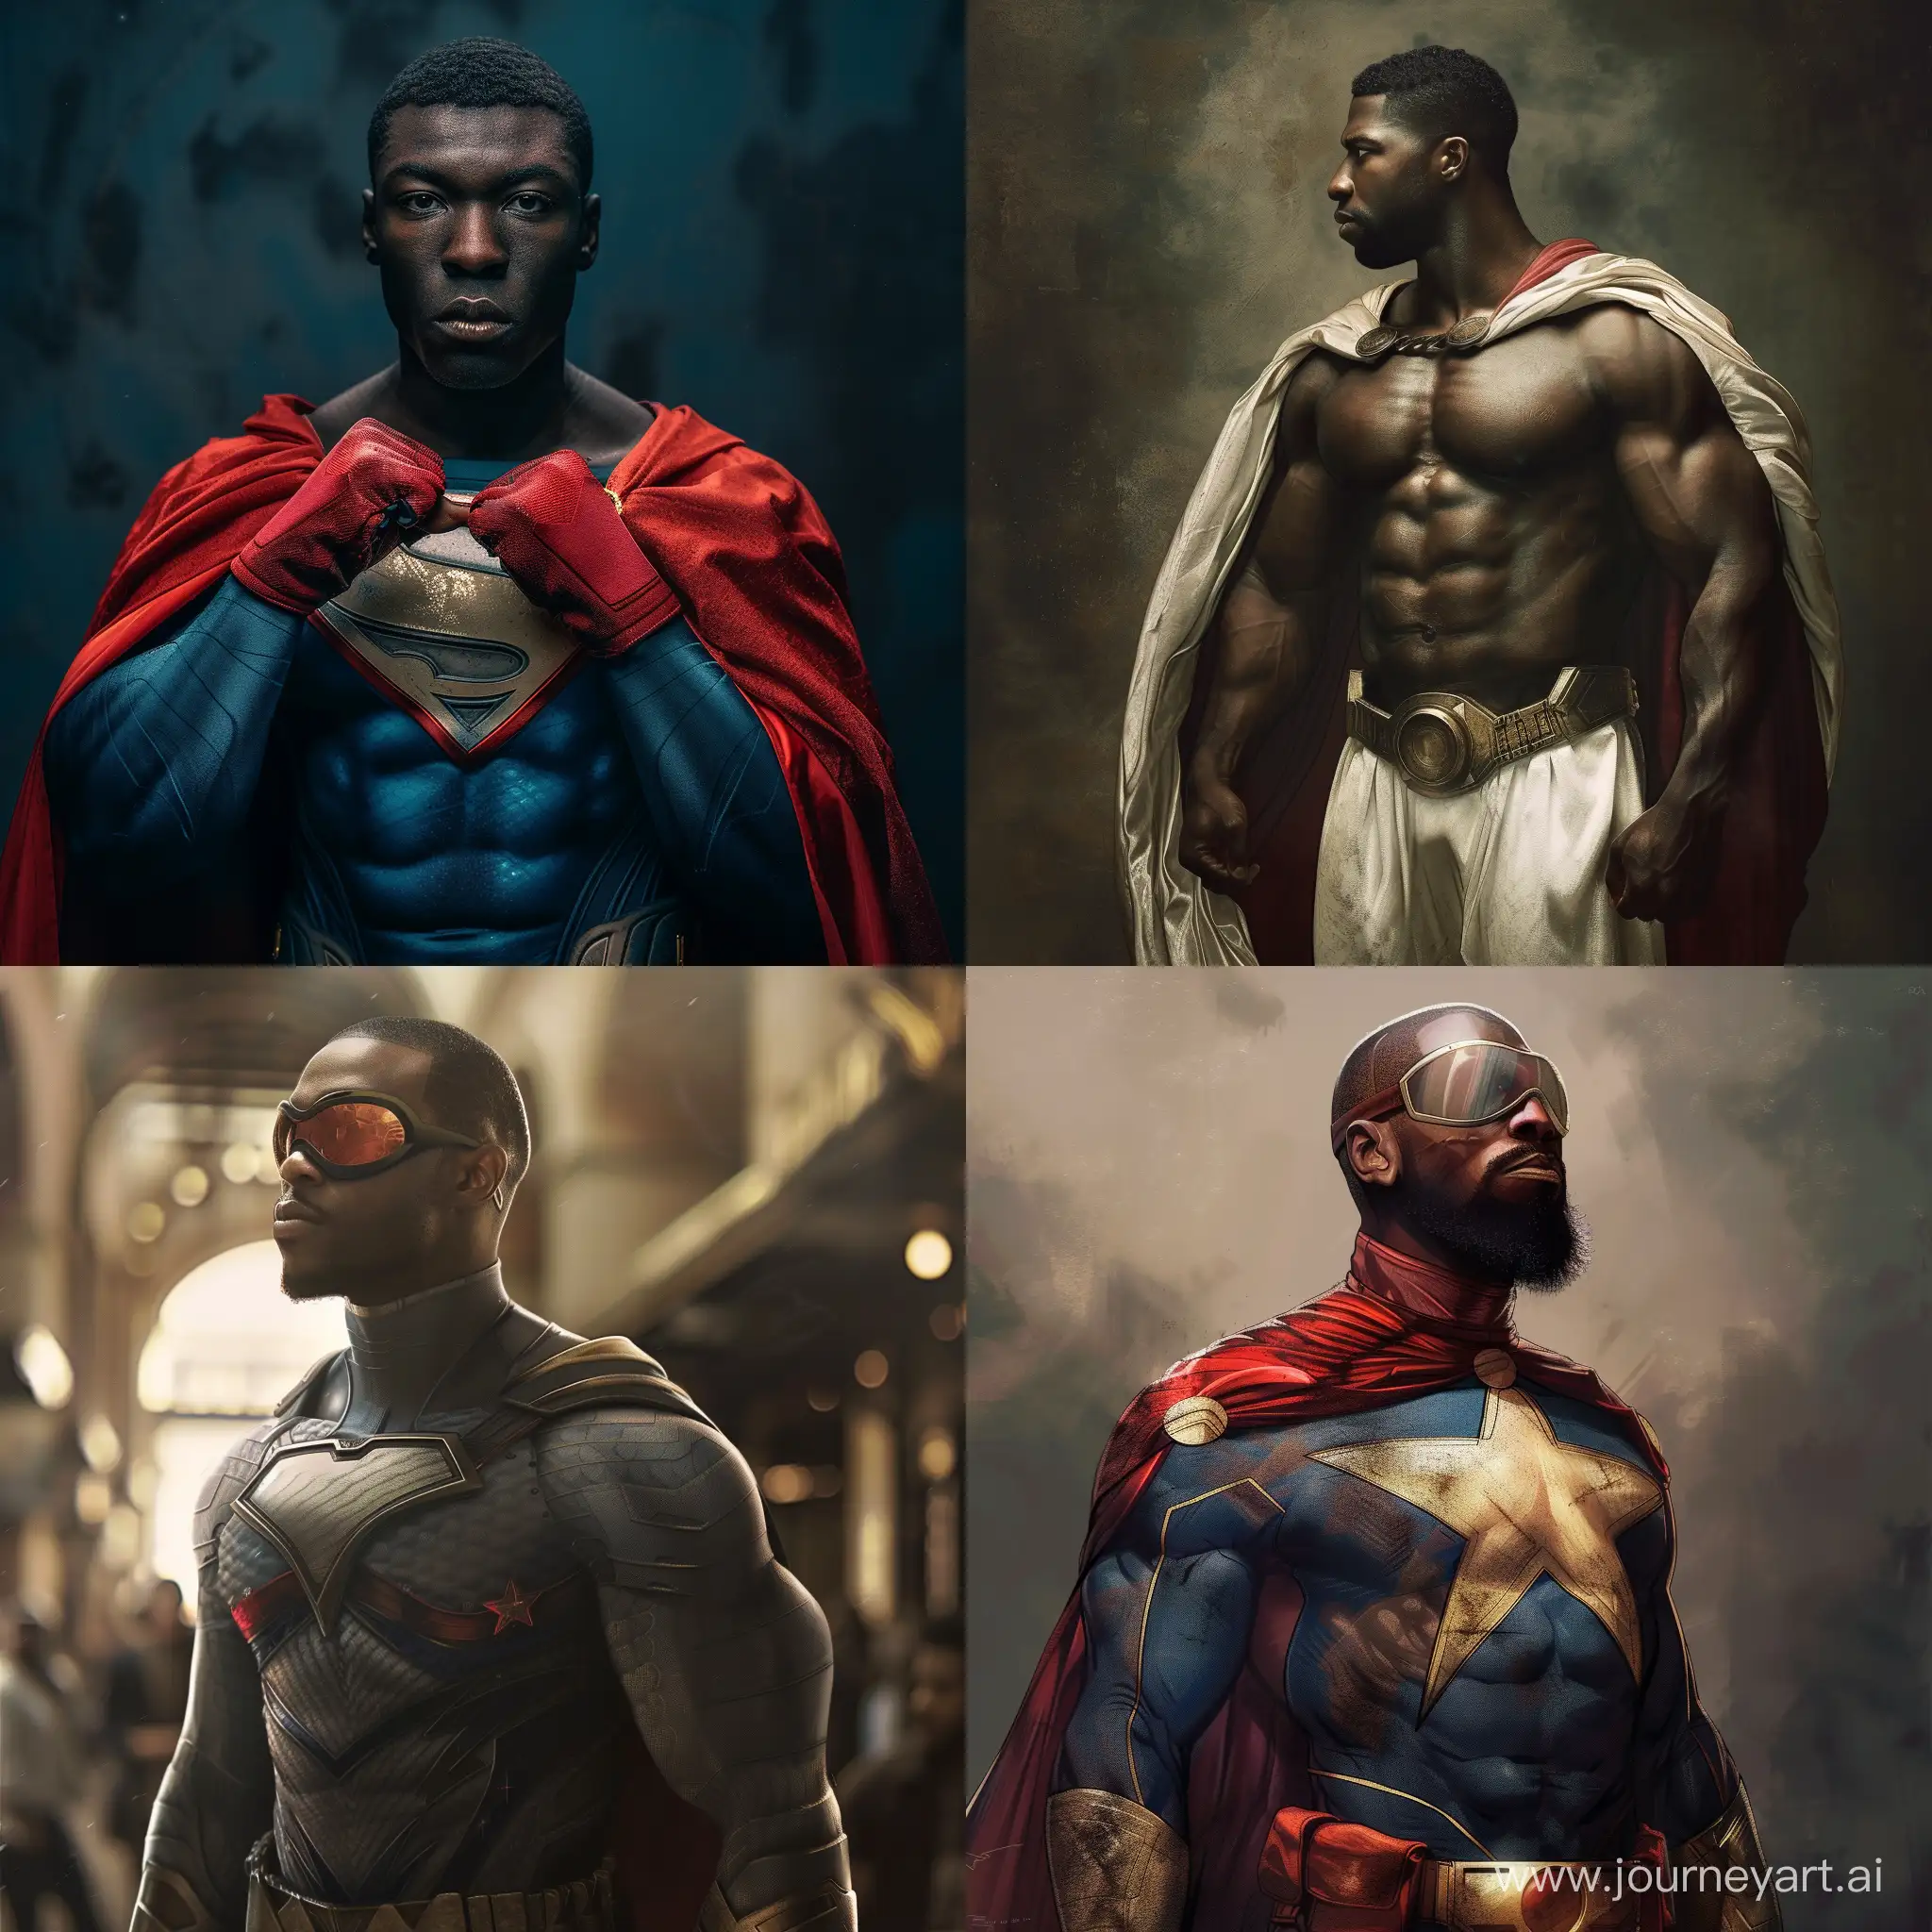 An African American superhero called The Last Movie Hero